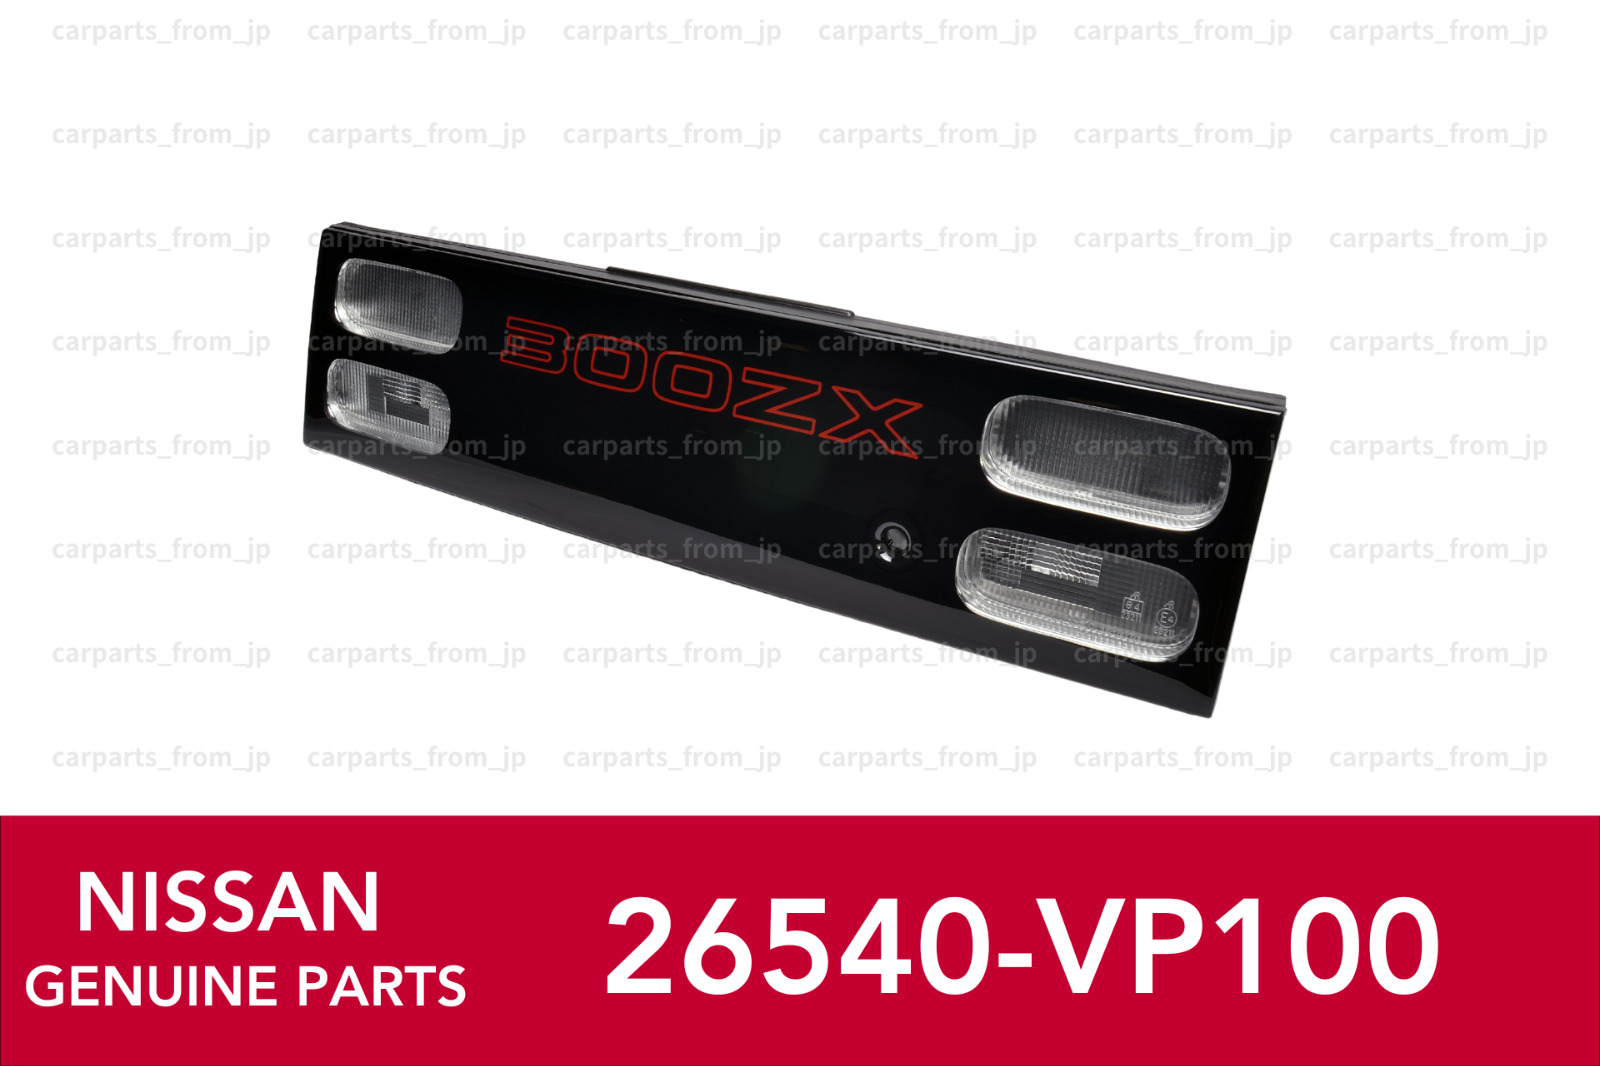 NISSAN Genuine OEM Rear Center Lamp Tail Reverse Light for 300ZX Z32 JDM